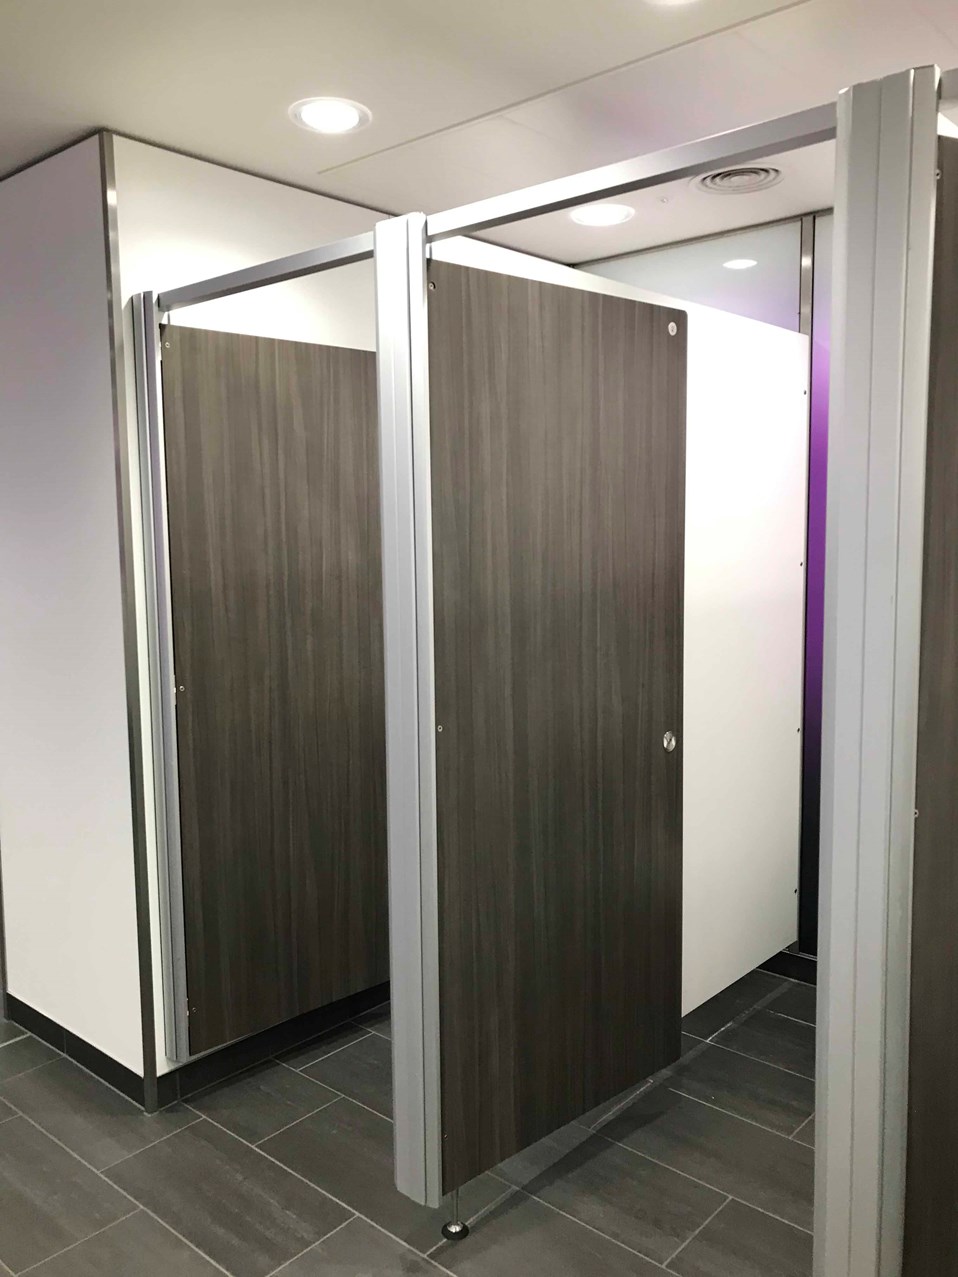 venesta-washrooms-toilet-cubicles-system-m-clipclad-gatwick-airport1